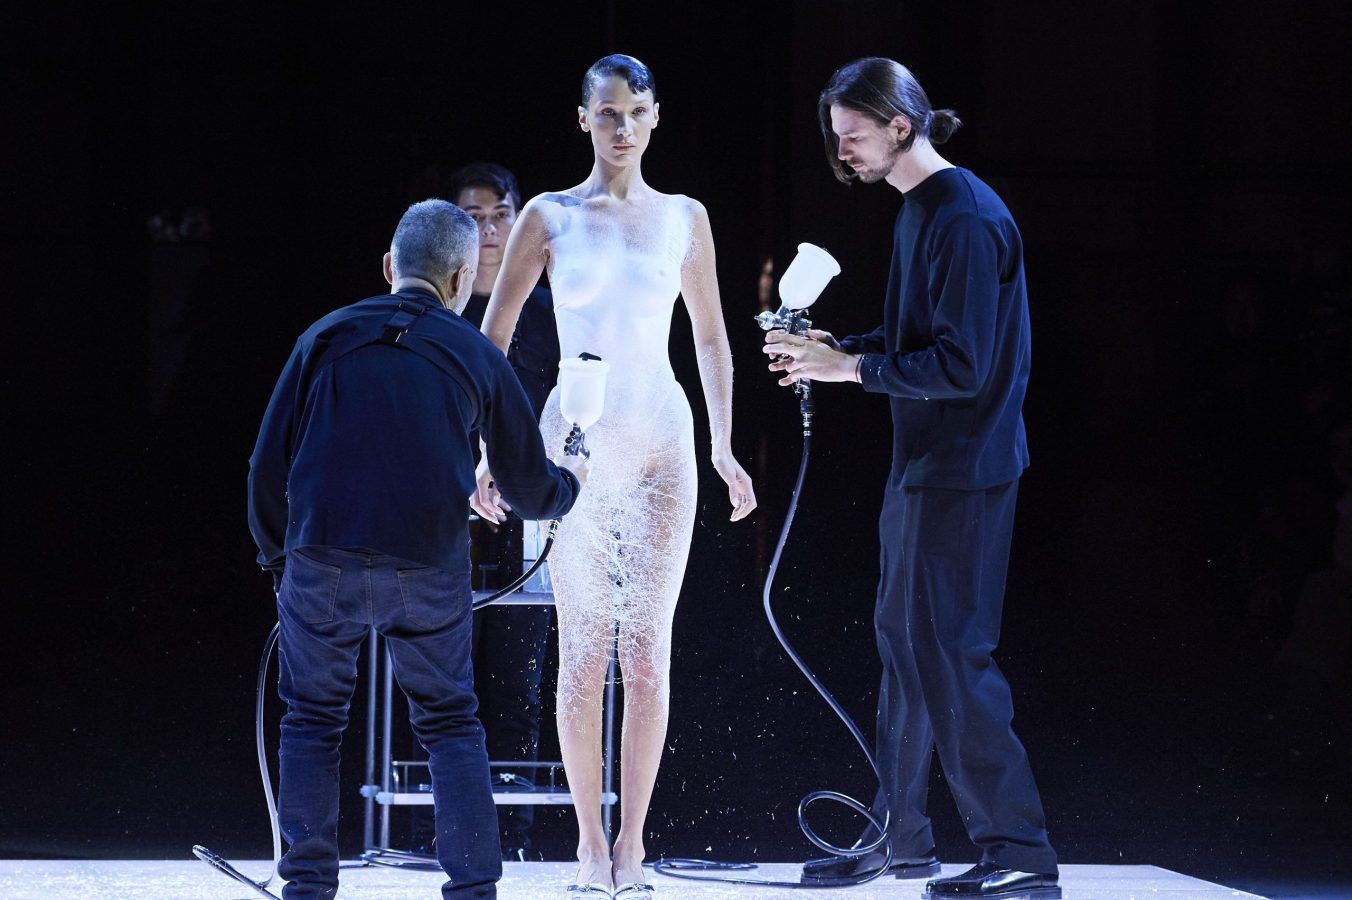 Bella Hadid gets dress spray-painted on mid-fashion show